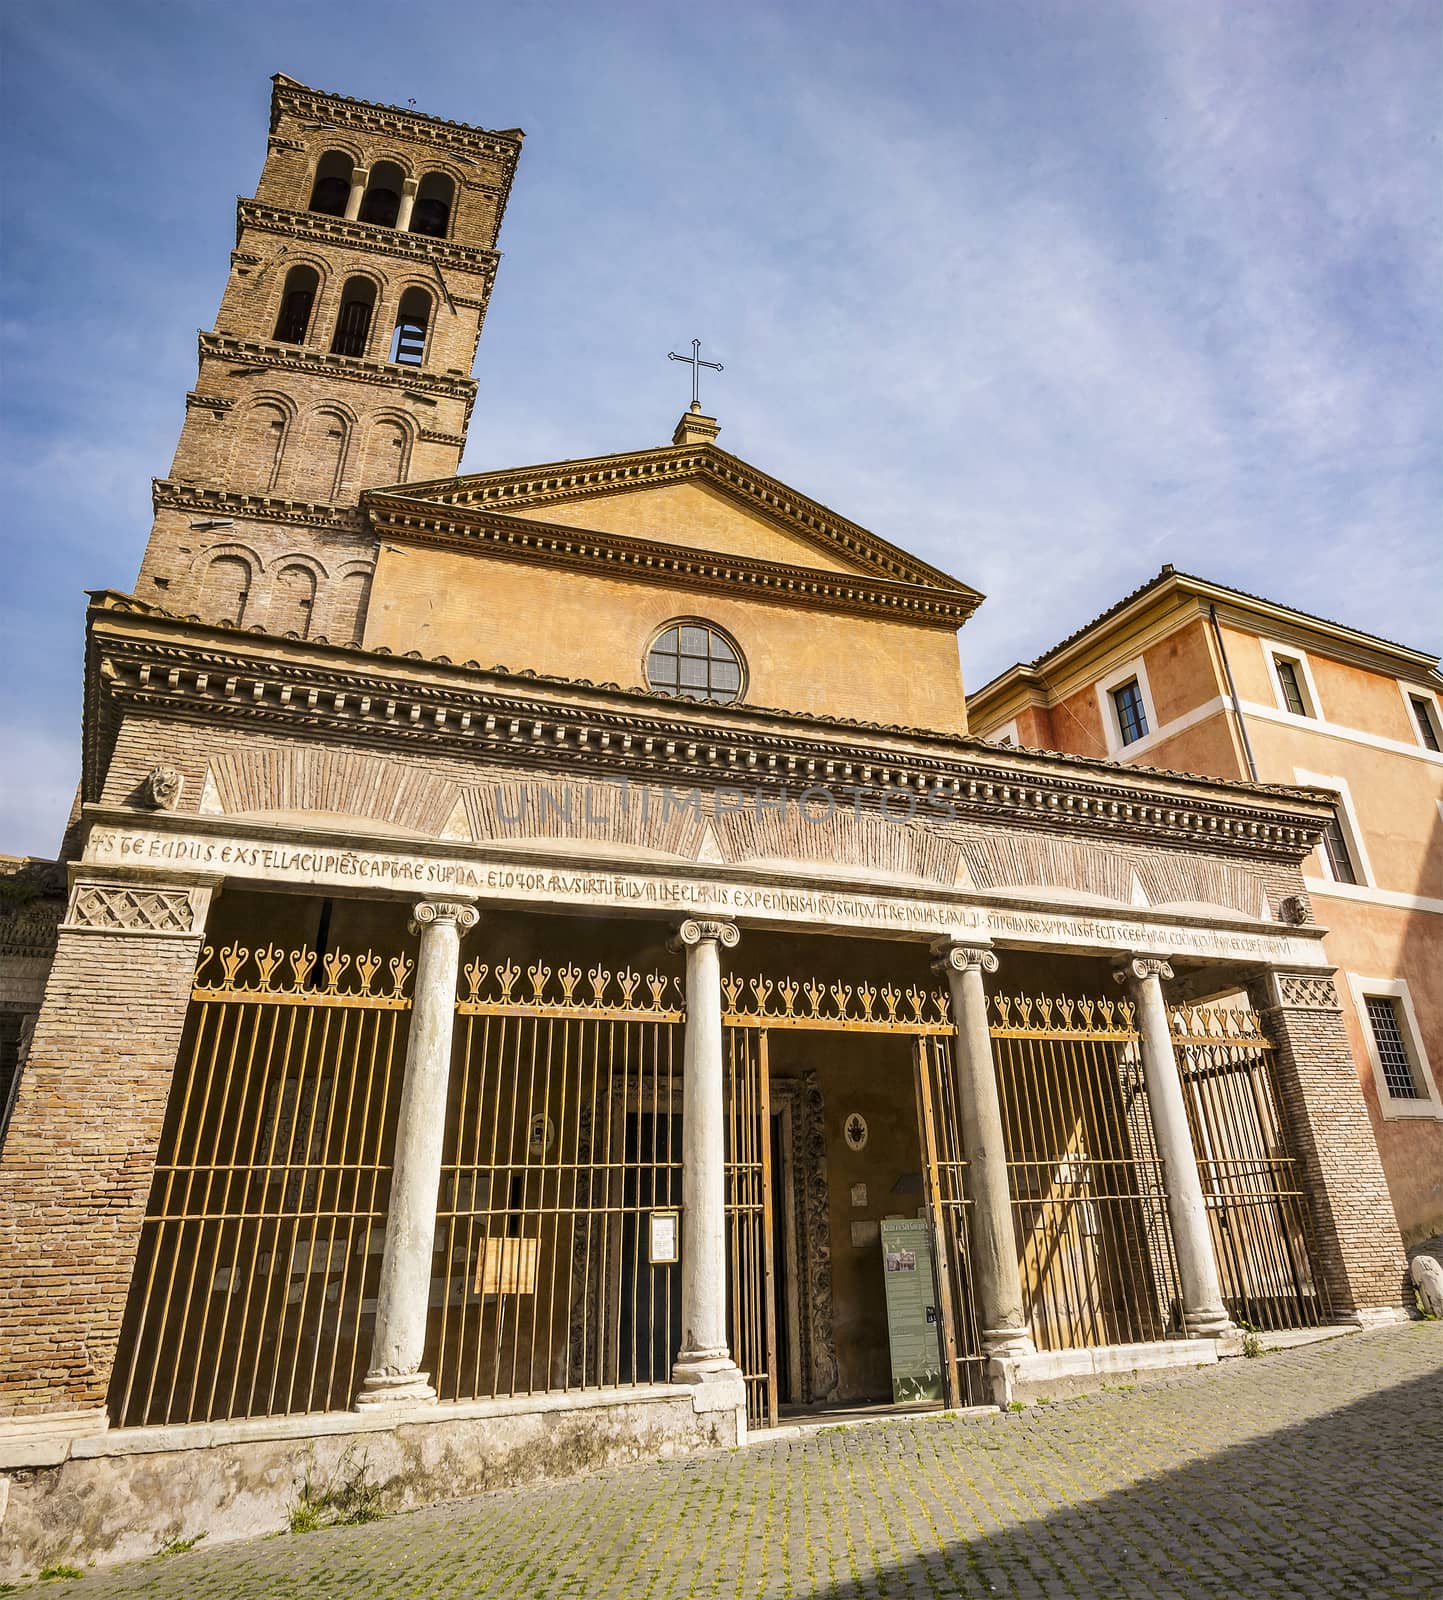 San Giorgio in Velabro church facade in Rome, built by greeks in 7th century,